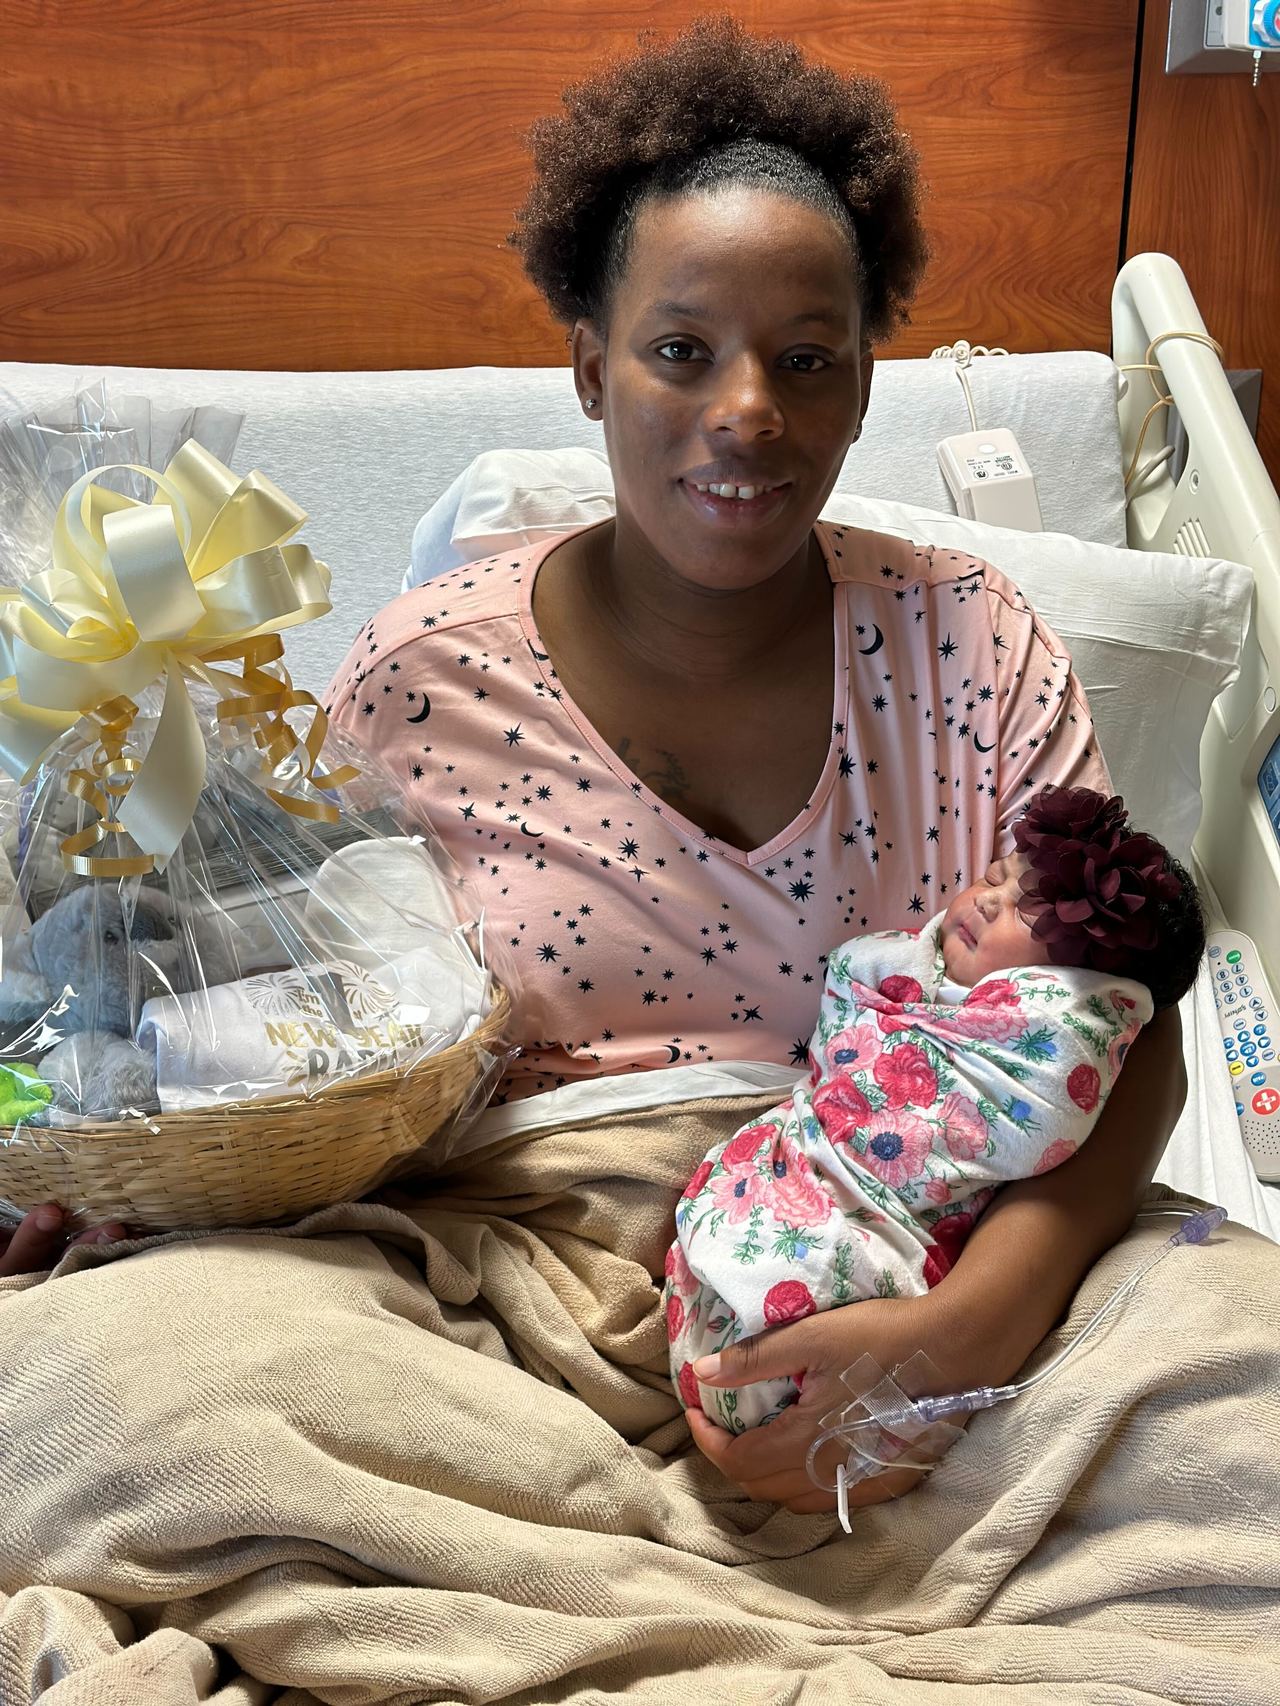 black newborn baby girl in hospital